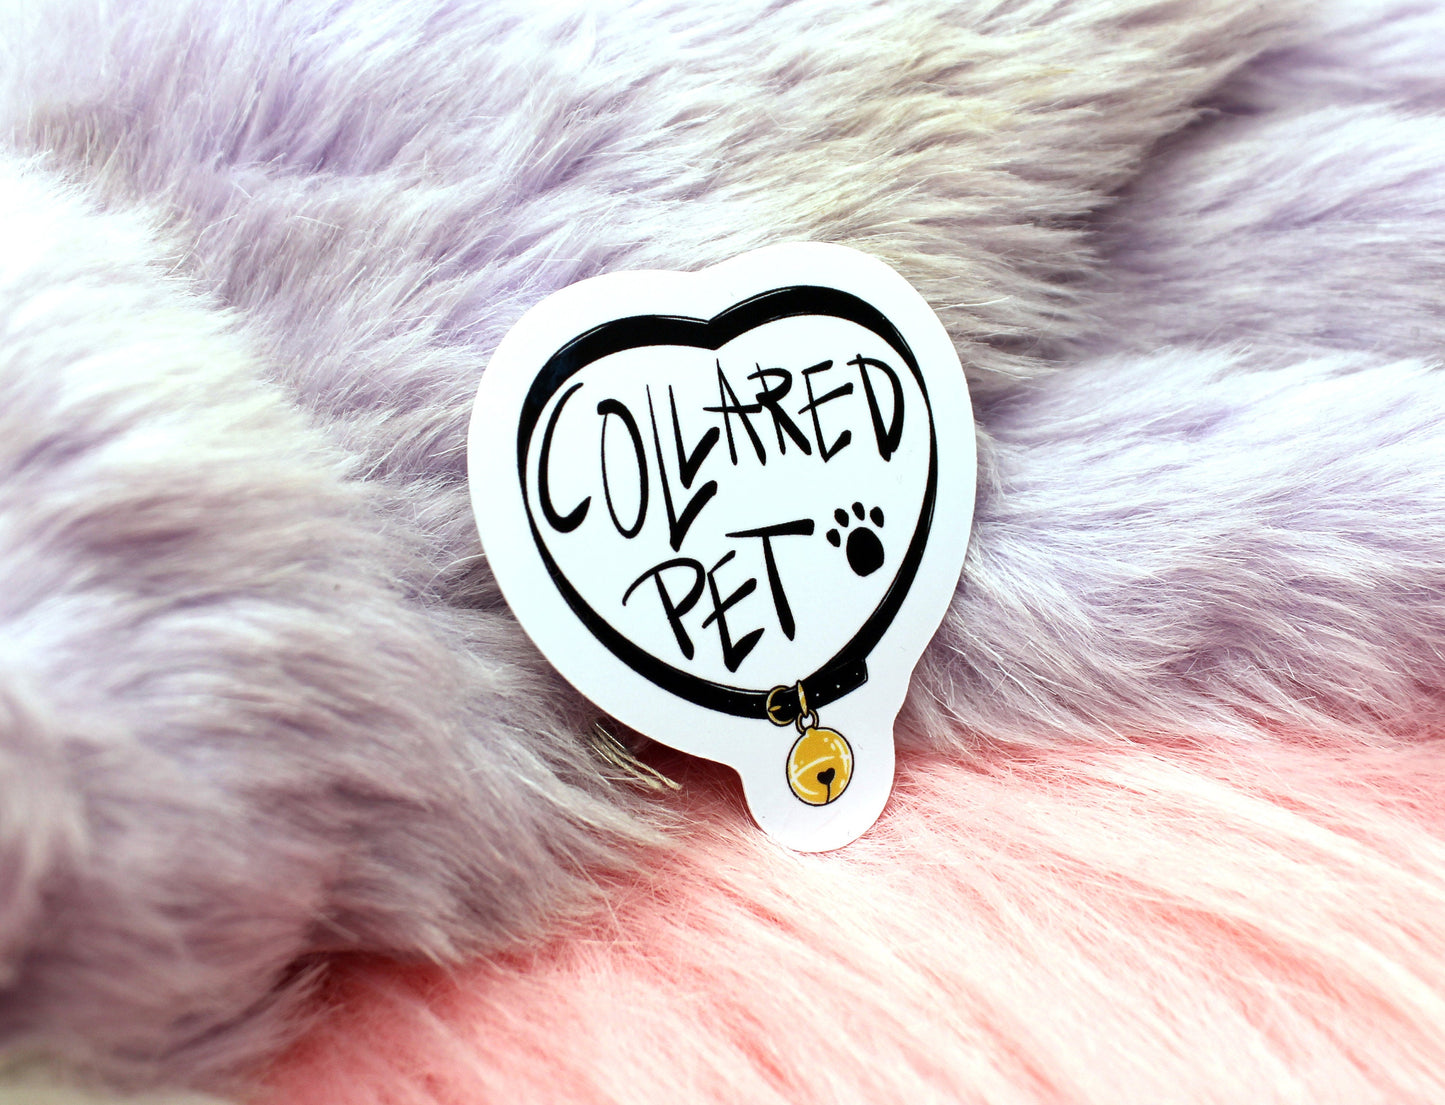 Collared Pet Sticker